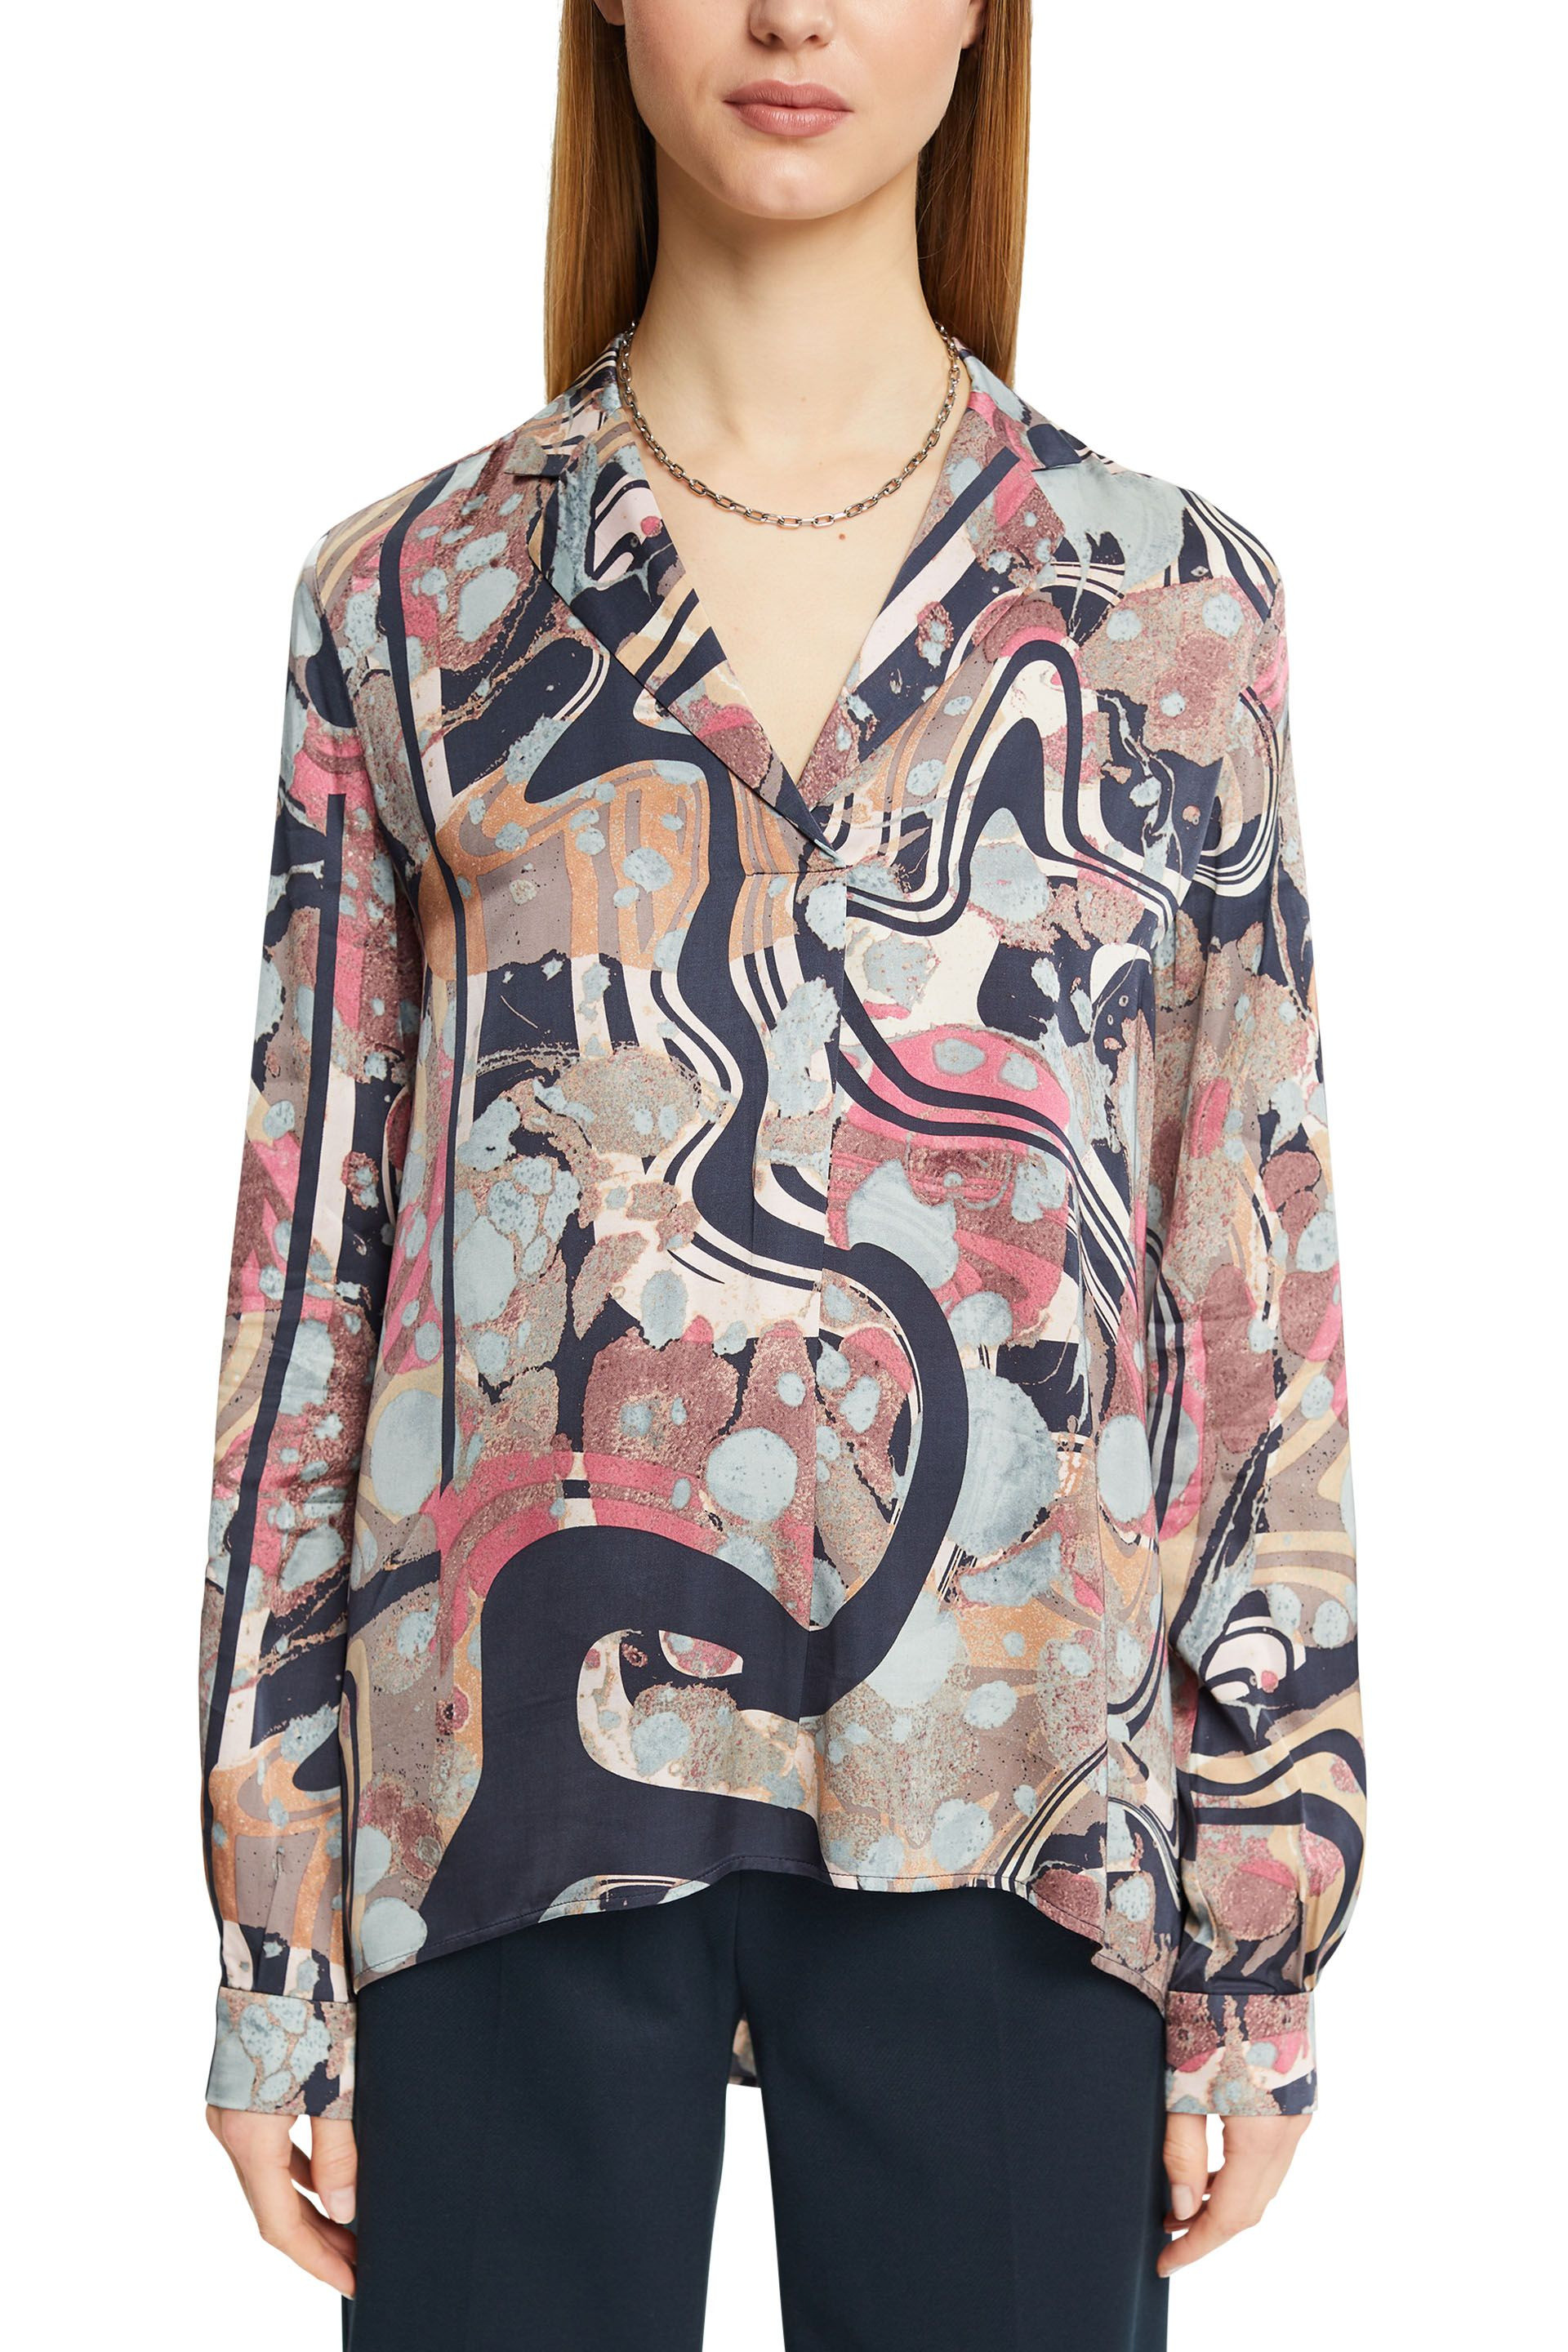 Esprit - Patterned blouse, Multicolor, large image number 1